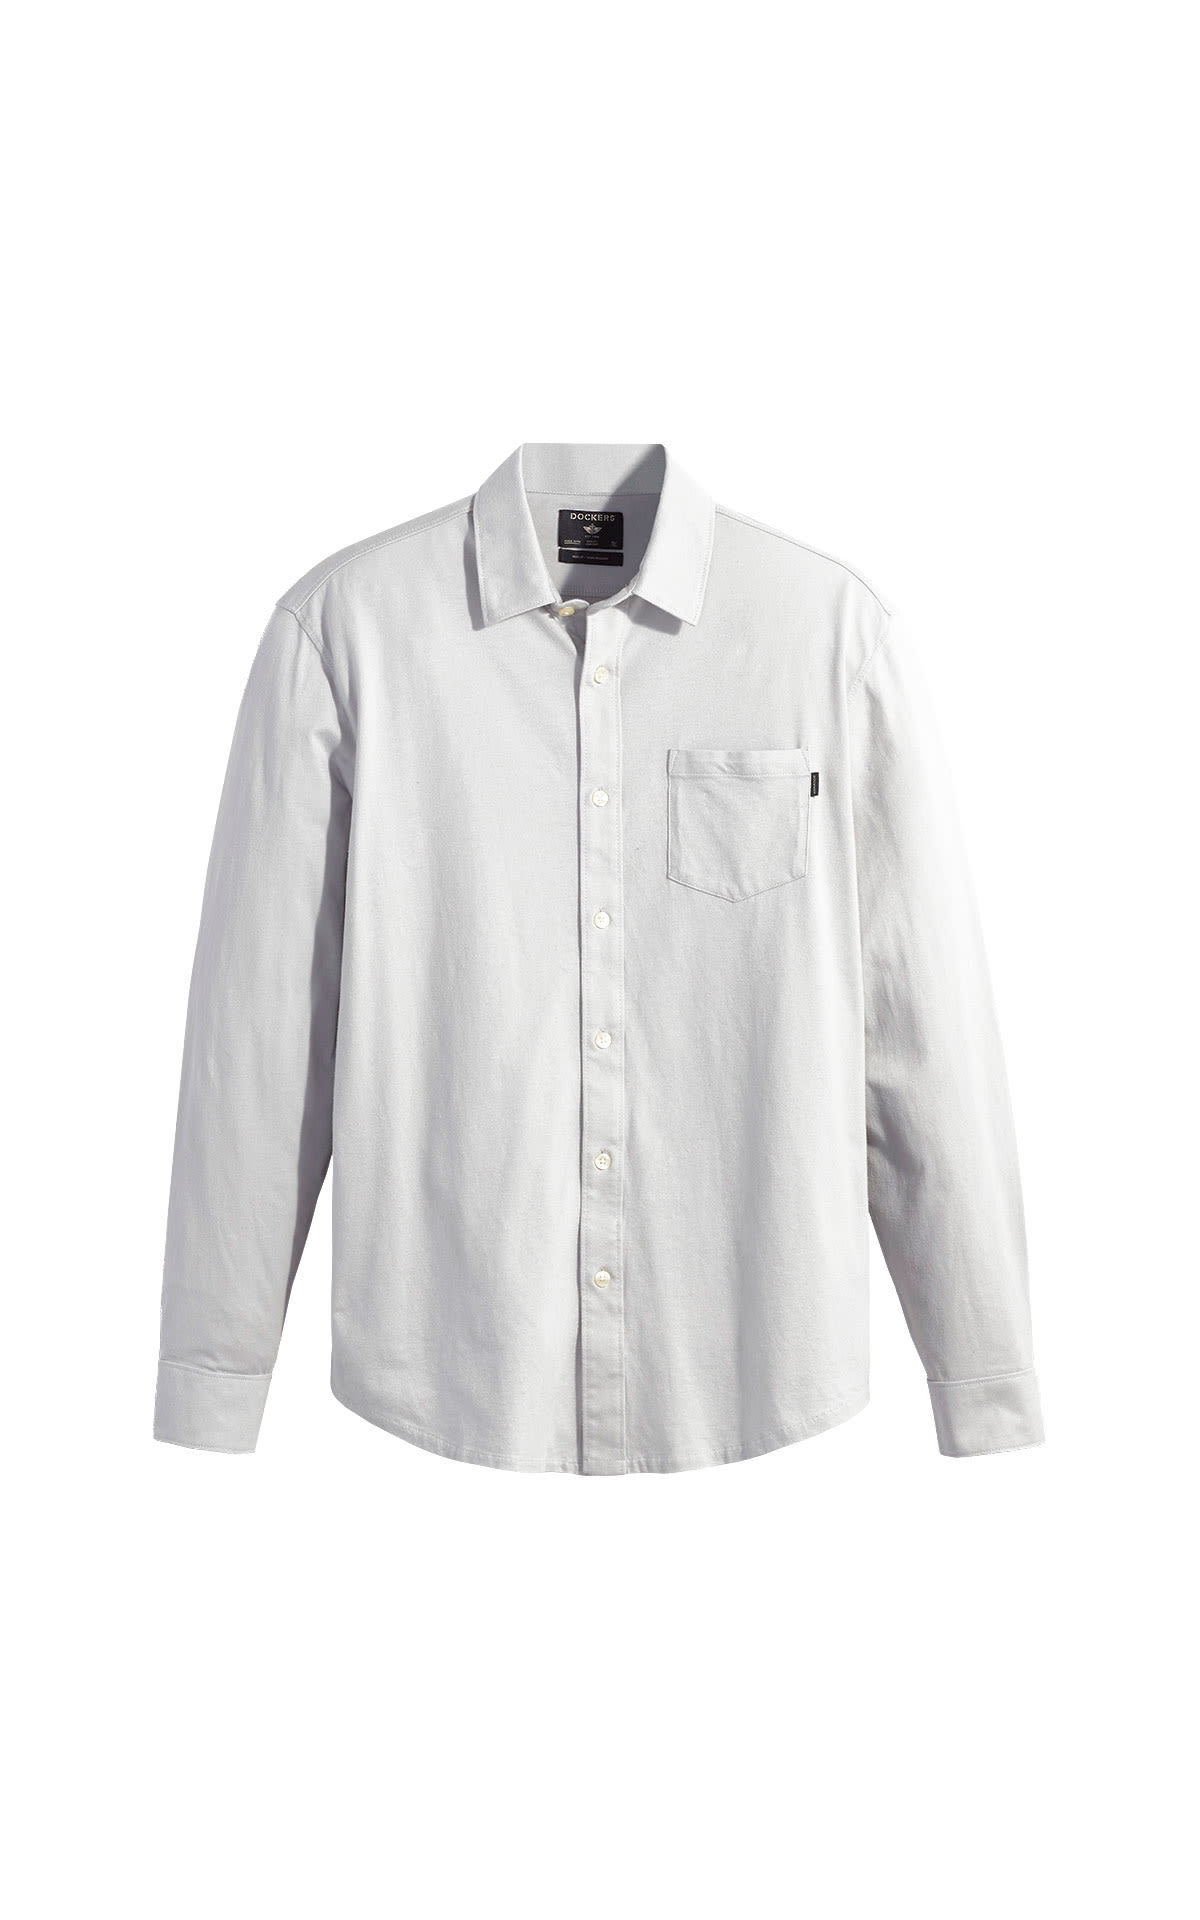 basic white shirt Dockers